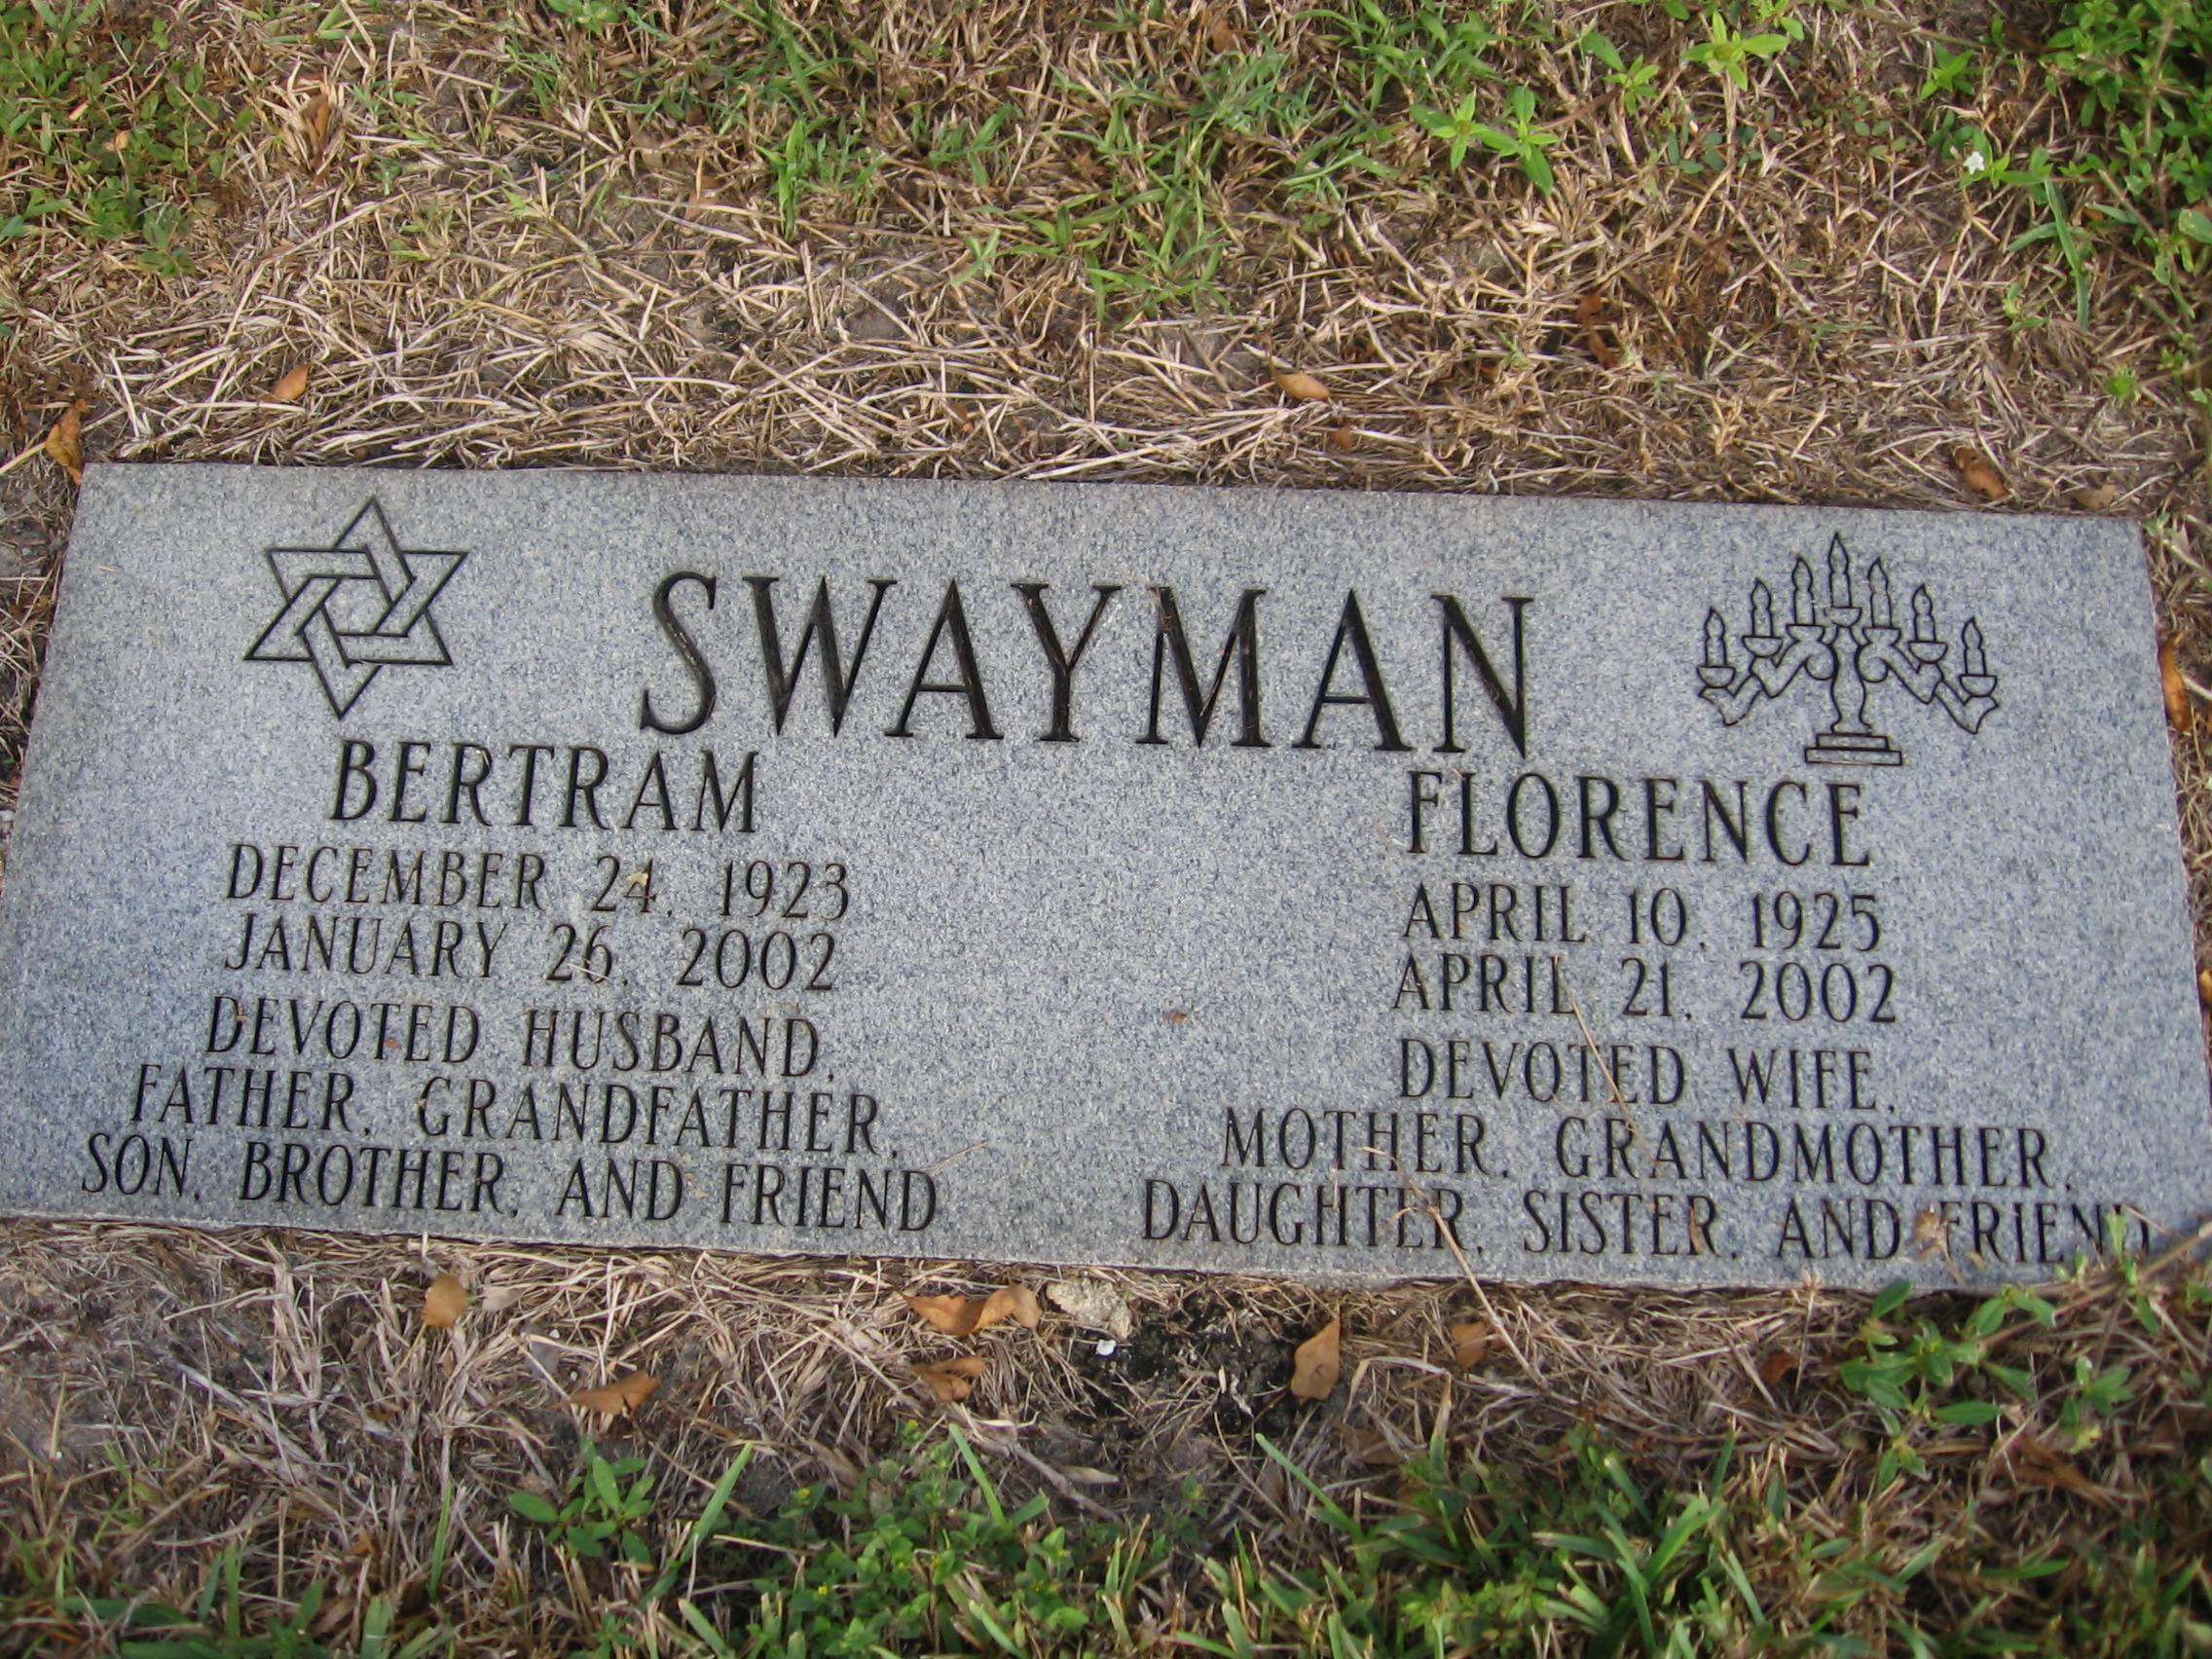 Florence Swayman